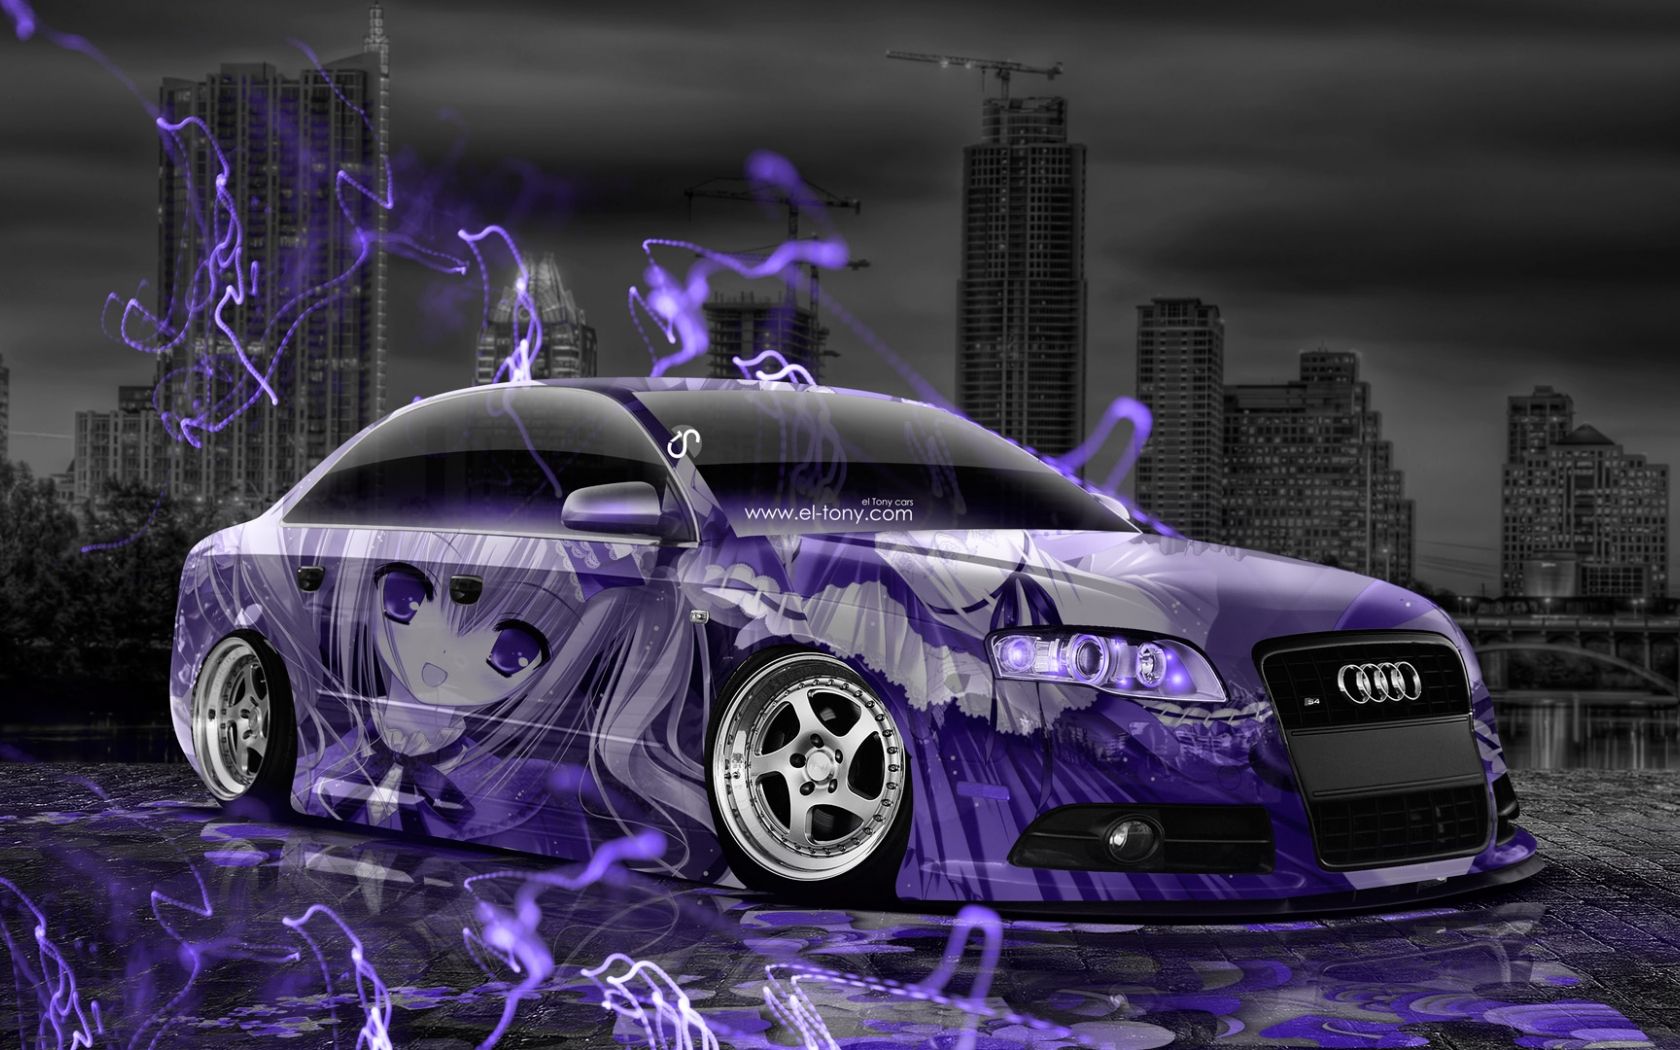 Unduh wallpaper anime x car Jpg | Sobatbackground